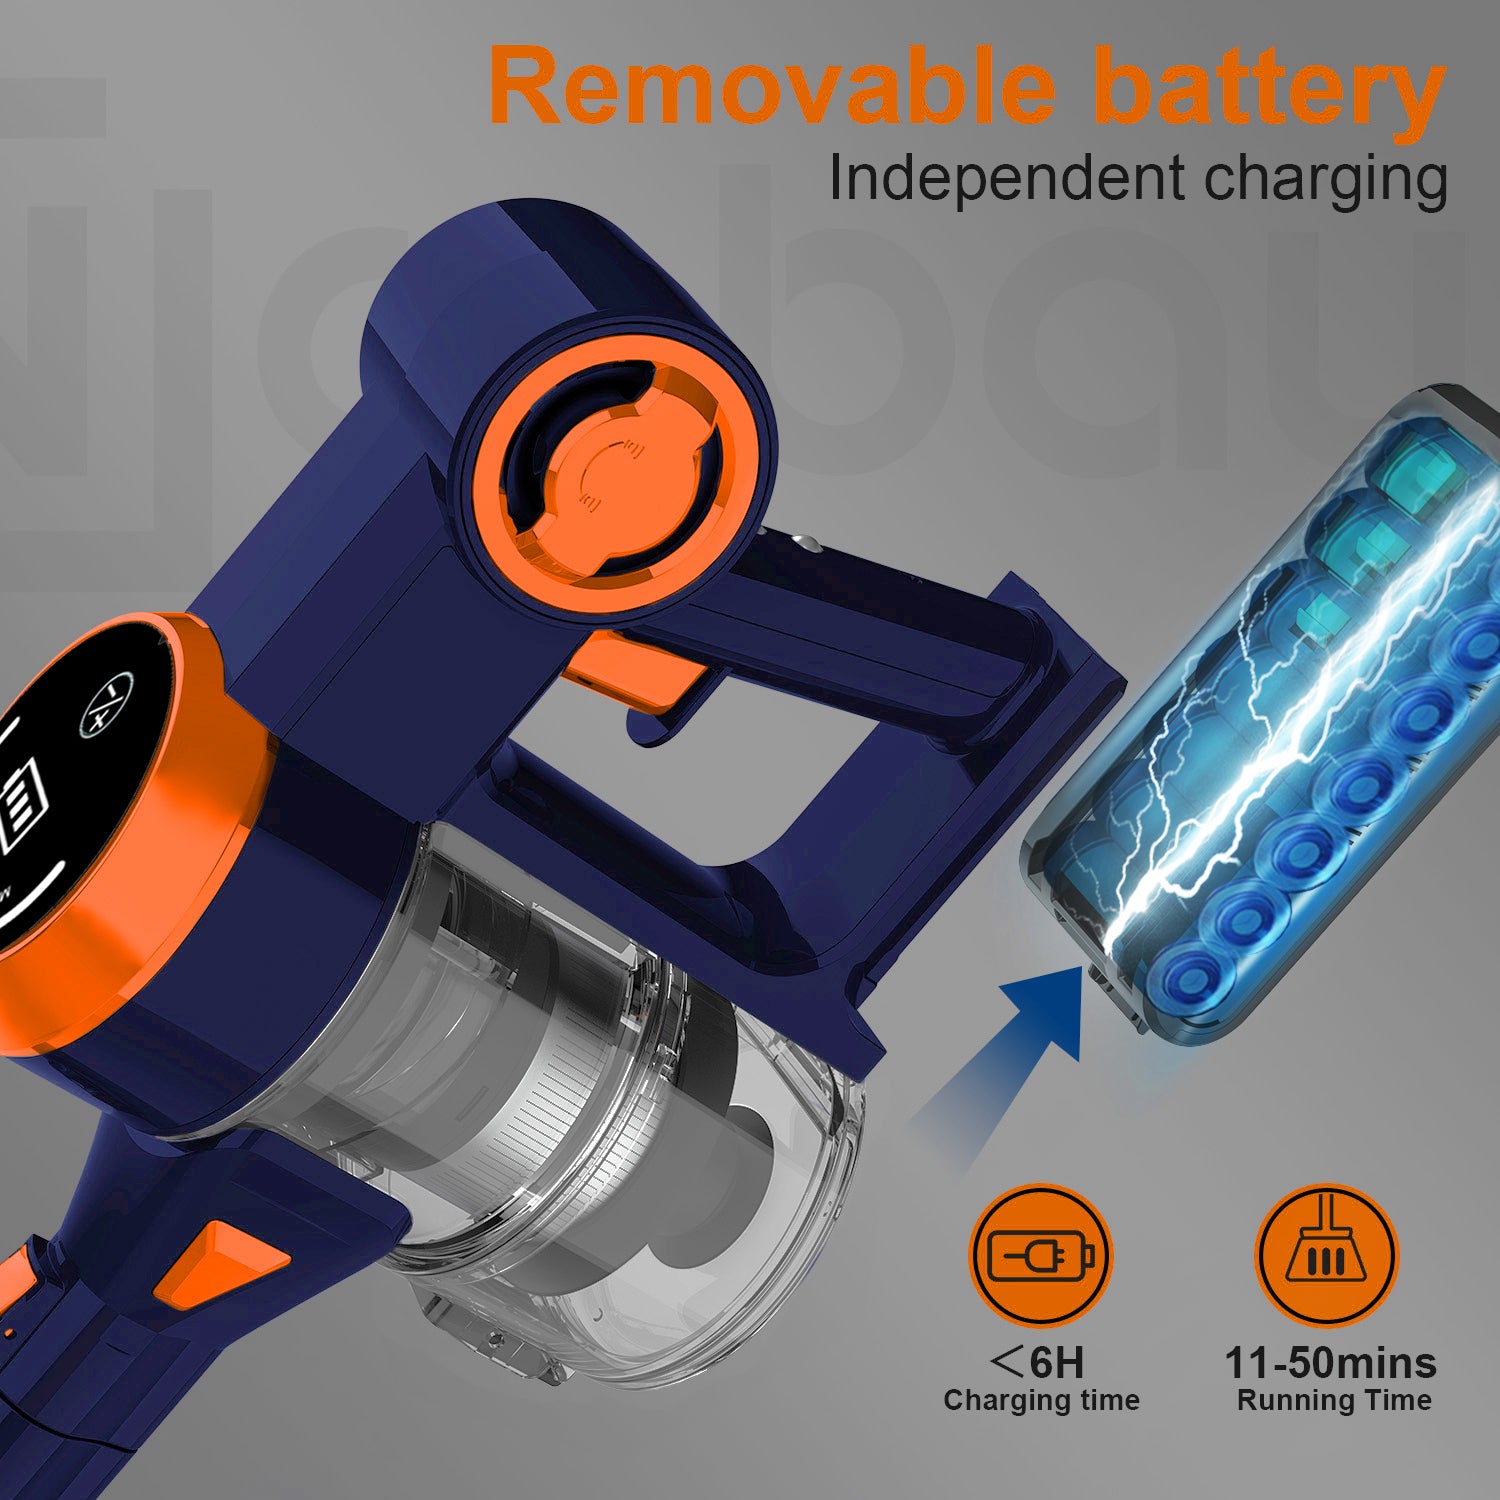 wurese EV-6803 25Kpa Brushless Motor Stick Cordless Vacuum Cleaner with LED Smart Induction auto-adjustment Blue and Orange Color